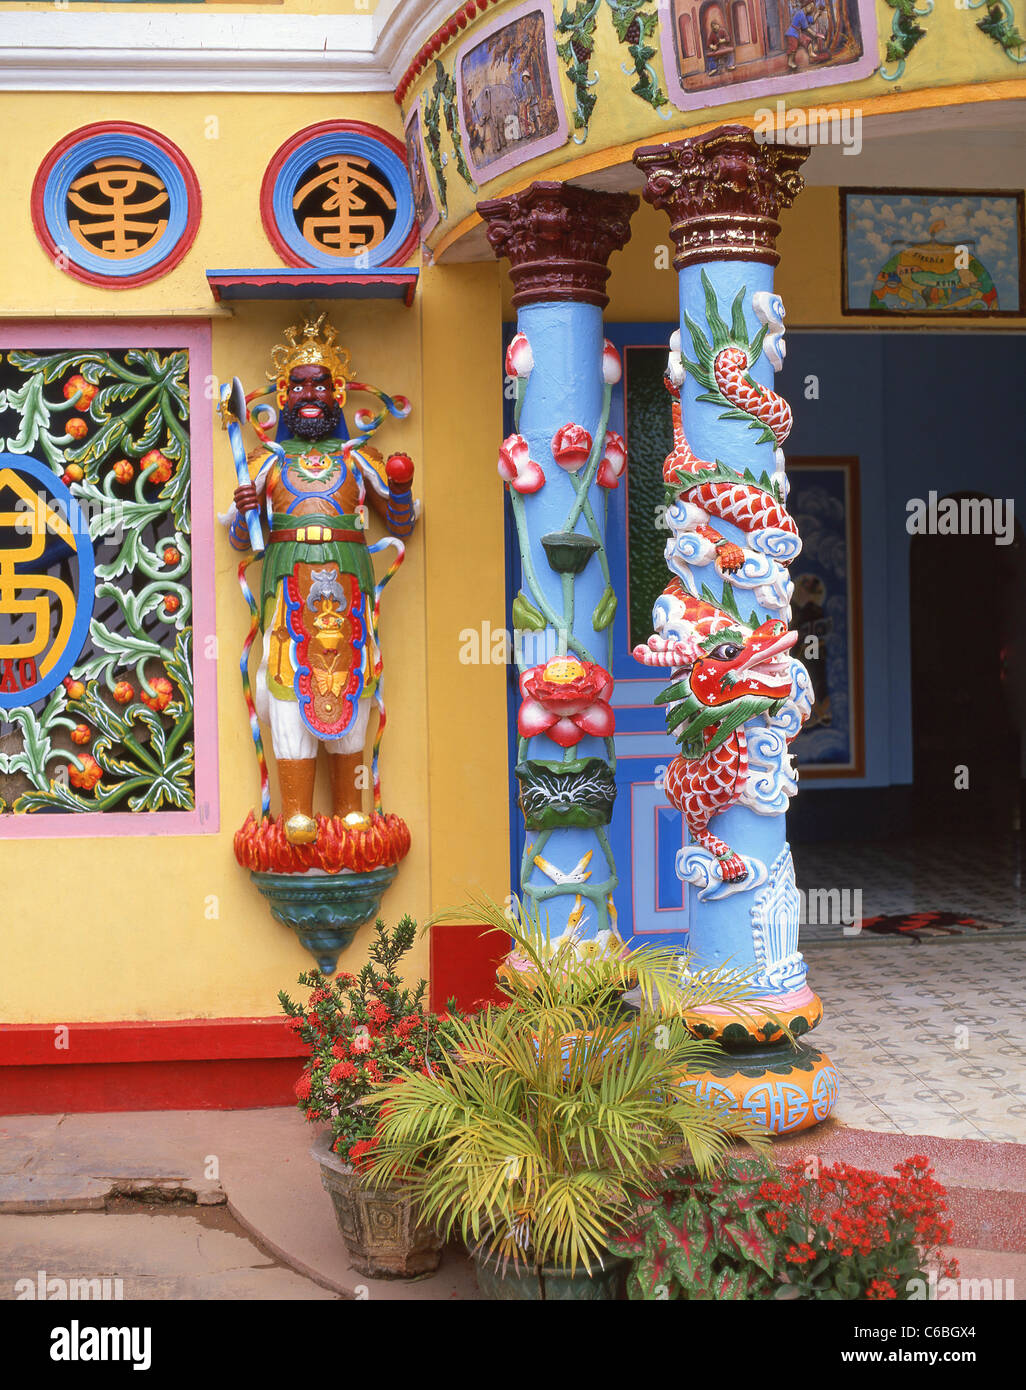 Tan An Thanh That Pagoda, Mekong Delta, Southern Vietnam, Socialist Republic of Vietnam Stock Photo